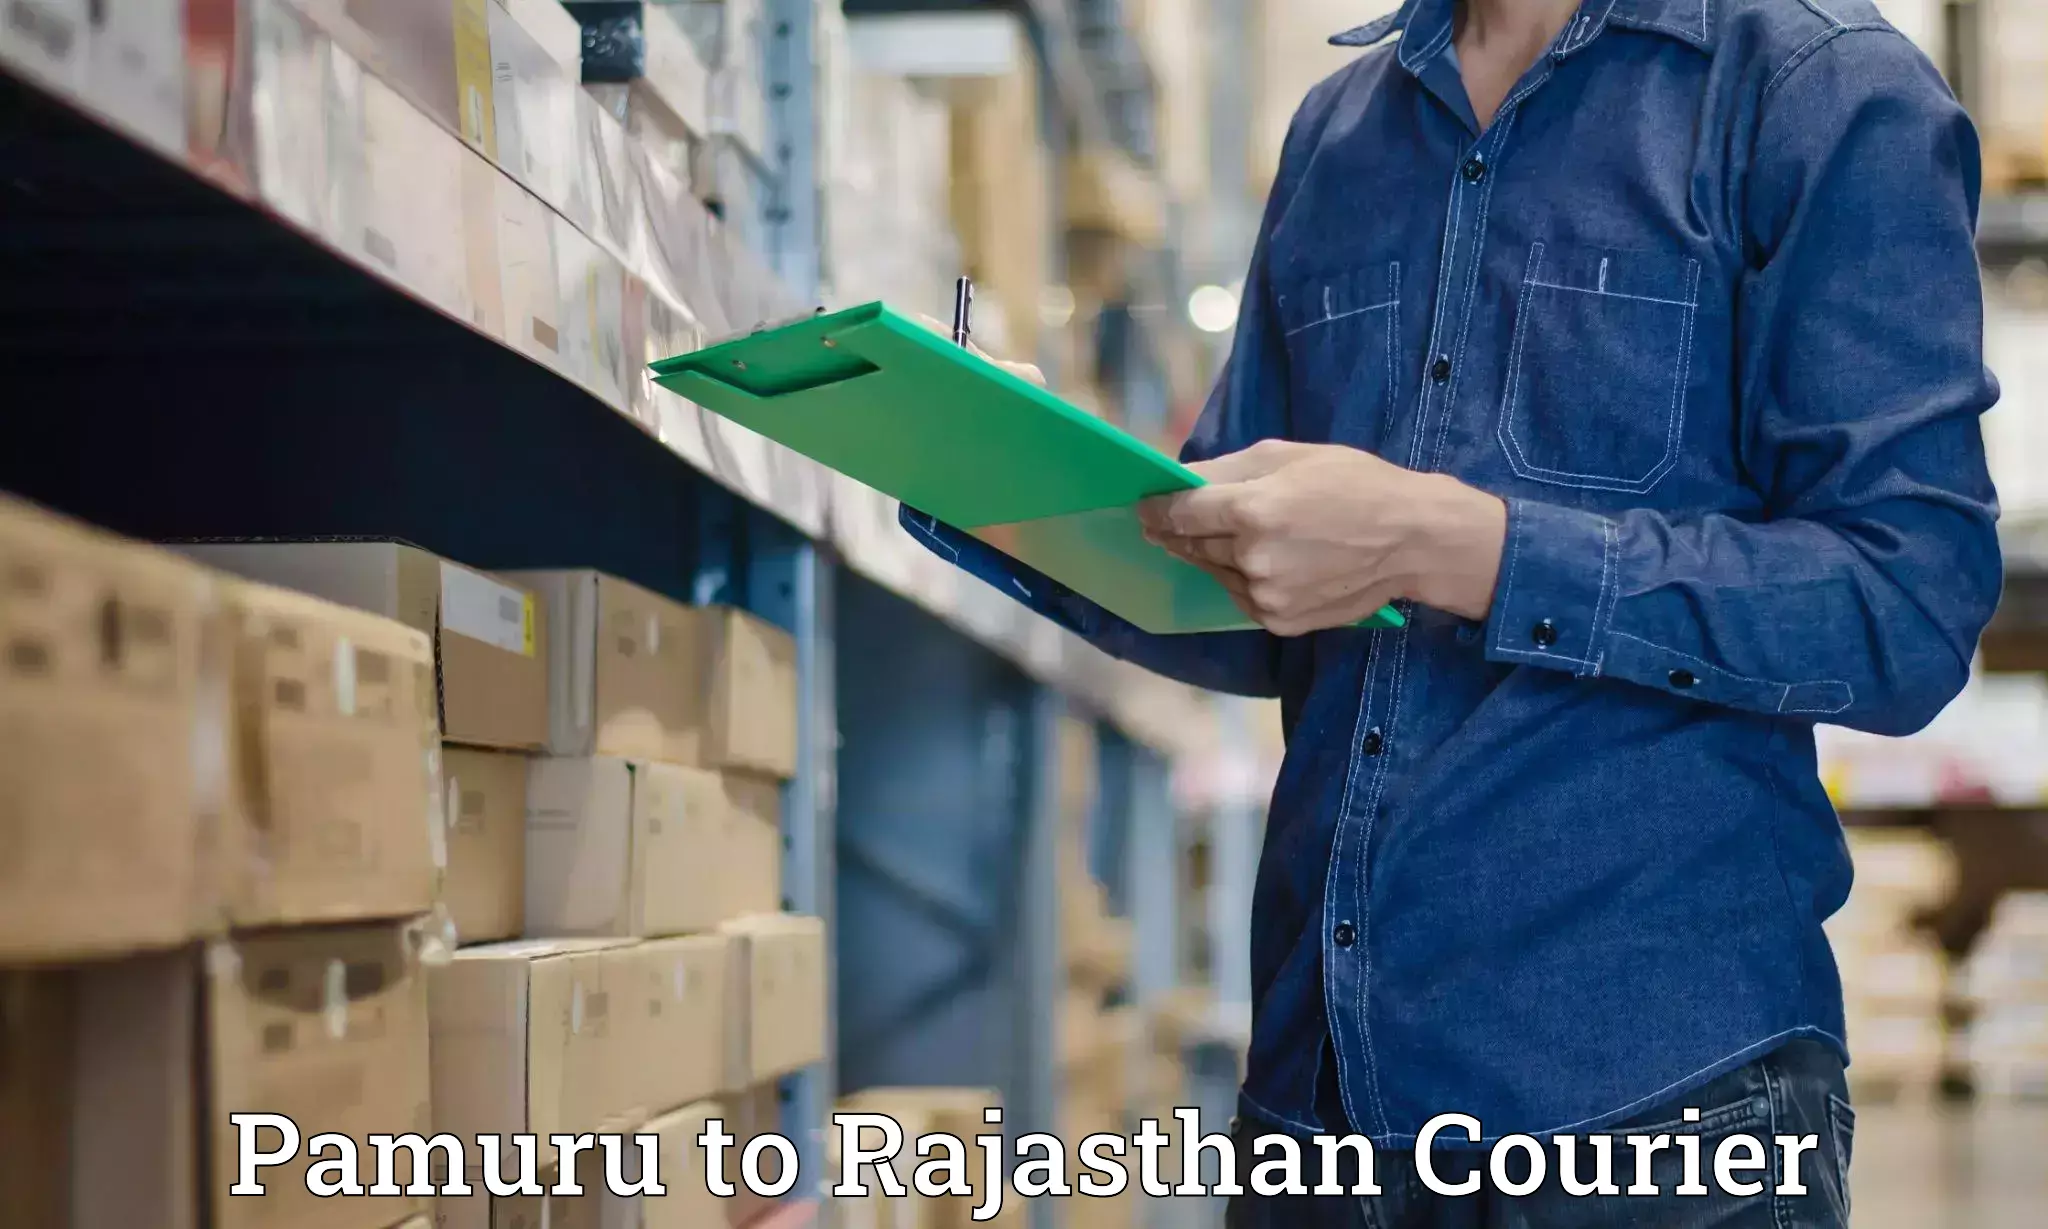 User-friendly delivery service Pamuru to Sultana